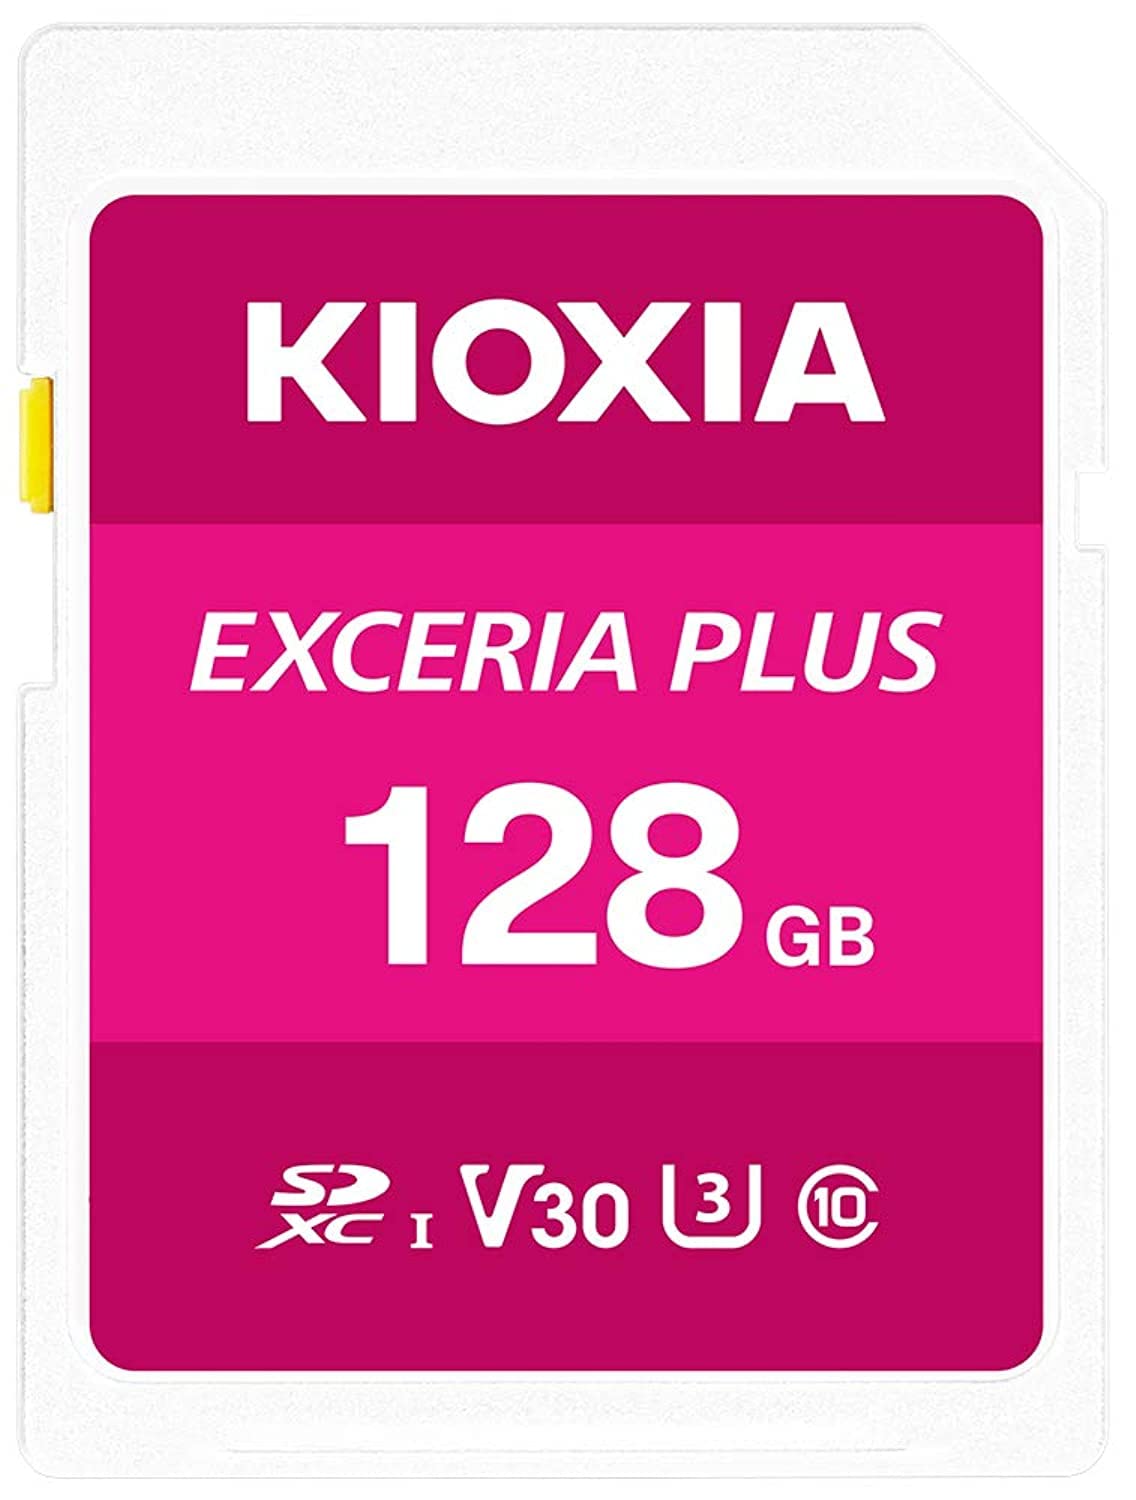 Kioxia 128GB Exceria Plus SDメモリーカード SDXC UHS-I U3 Class 10 V30 4K ビデオ録画 LNPL1M128GG4